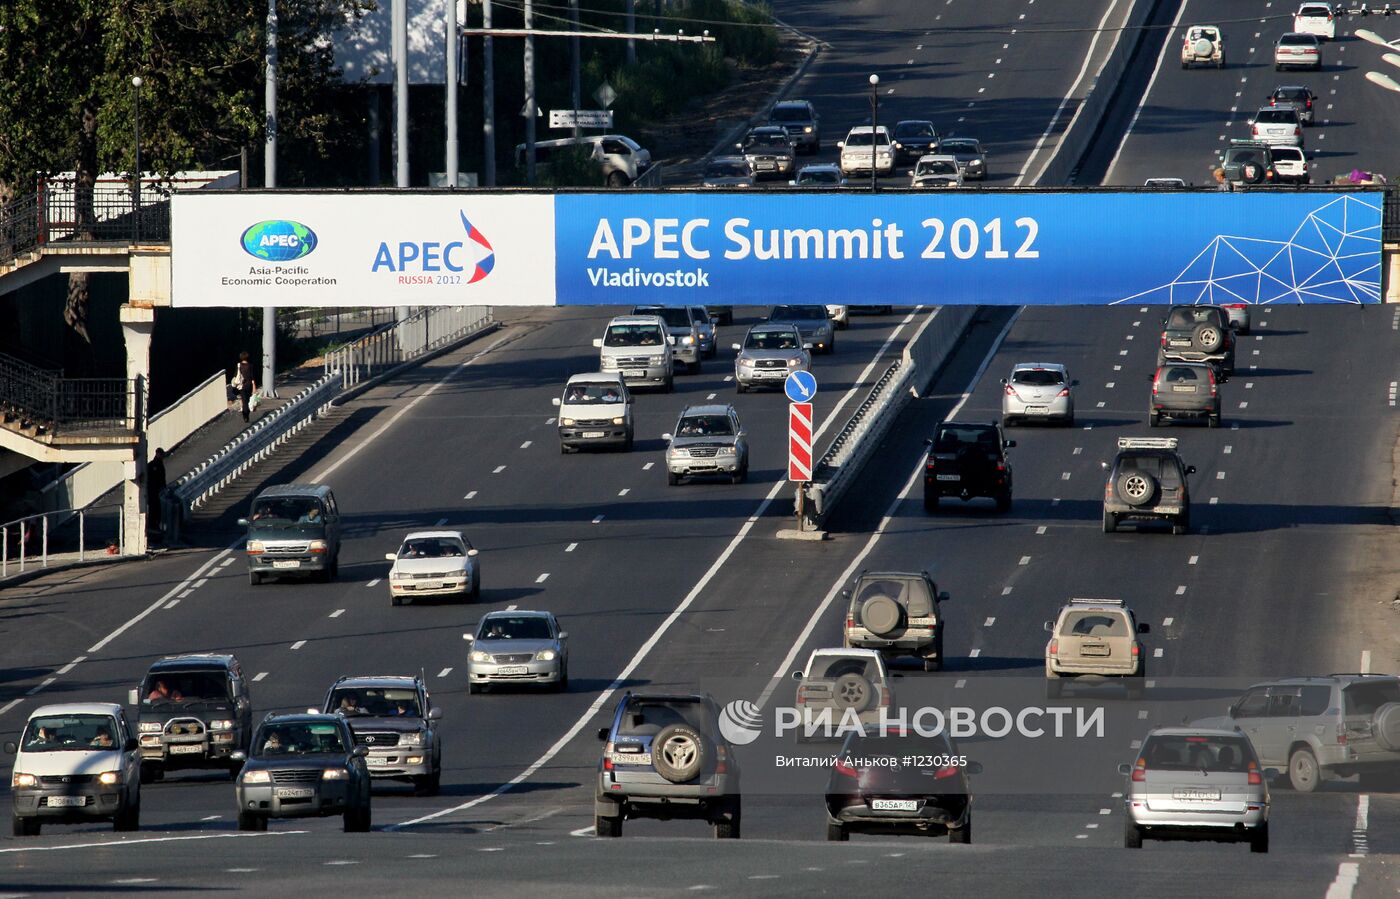 Символика саммита АТЭС-2012 во Владивостоке